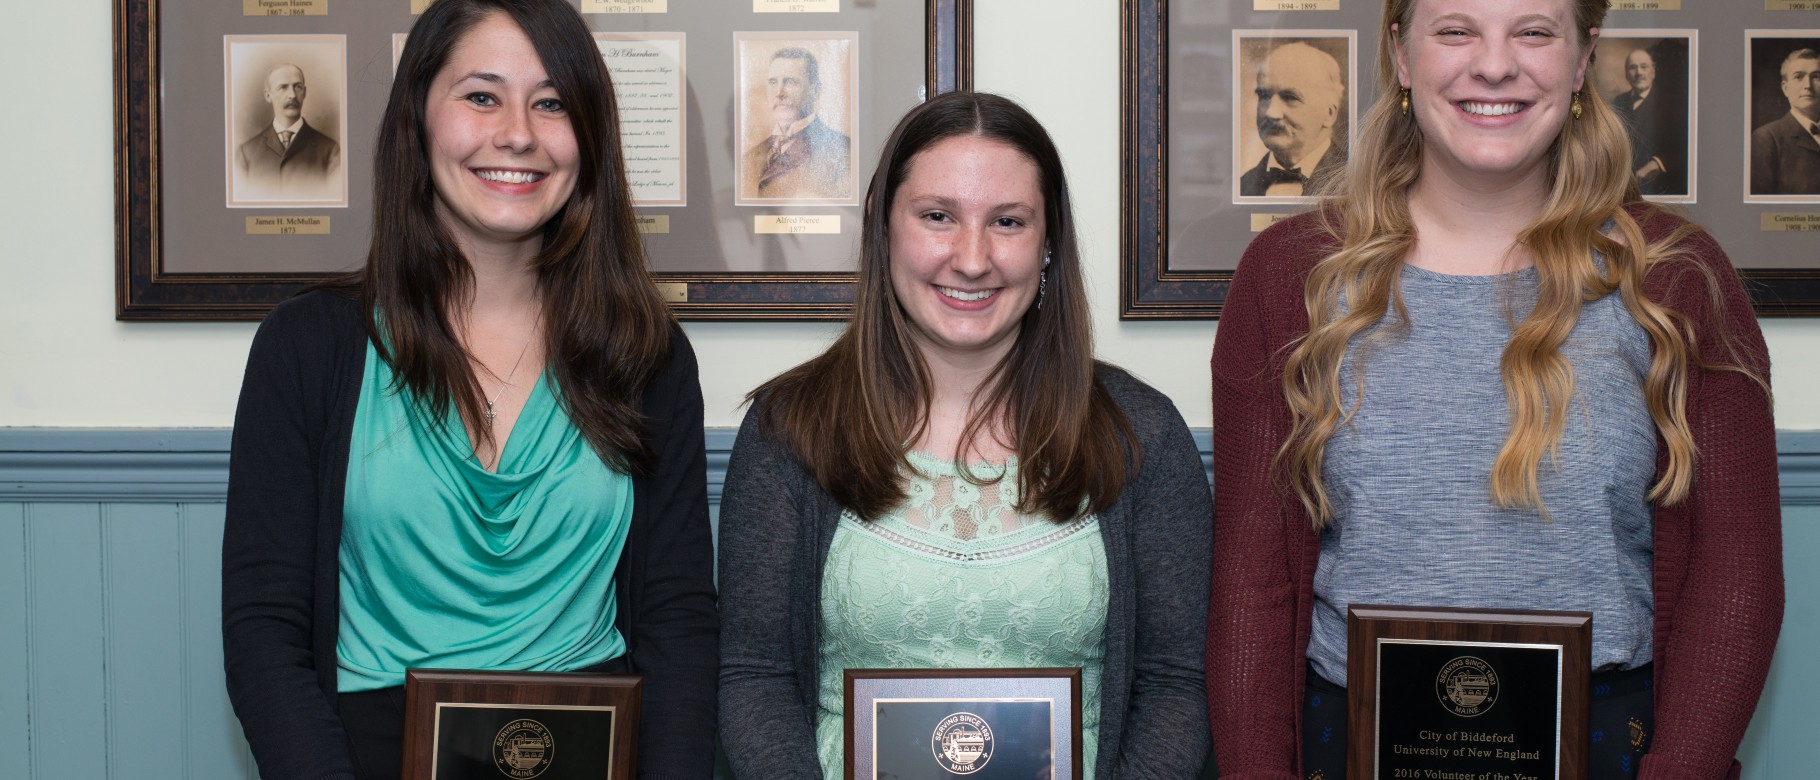 Award winners L-R: Samantha Shepard, Megan Perry and Sarah Hoover